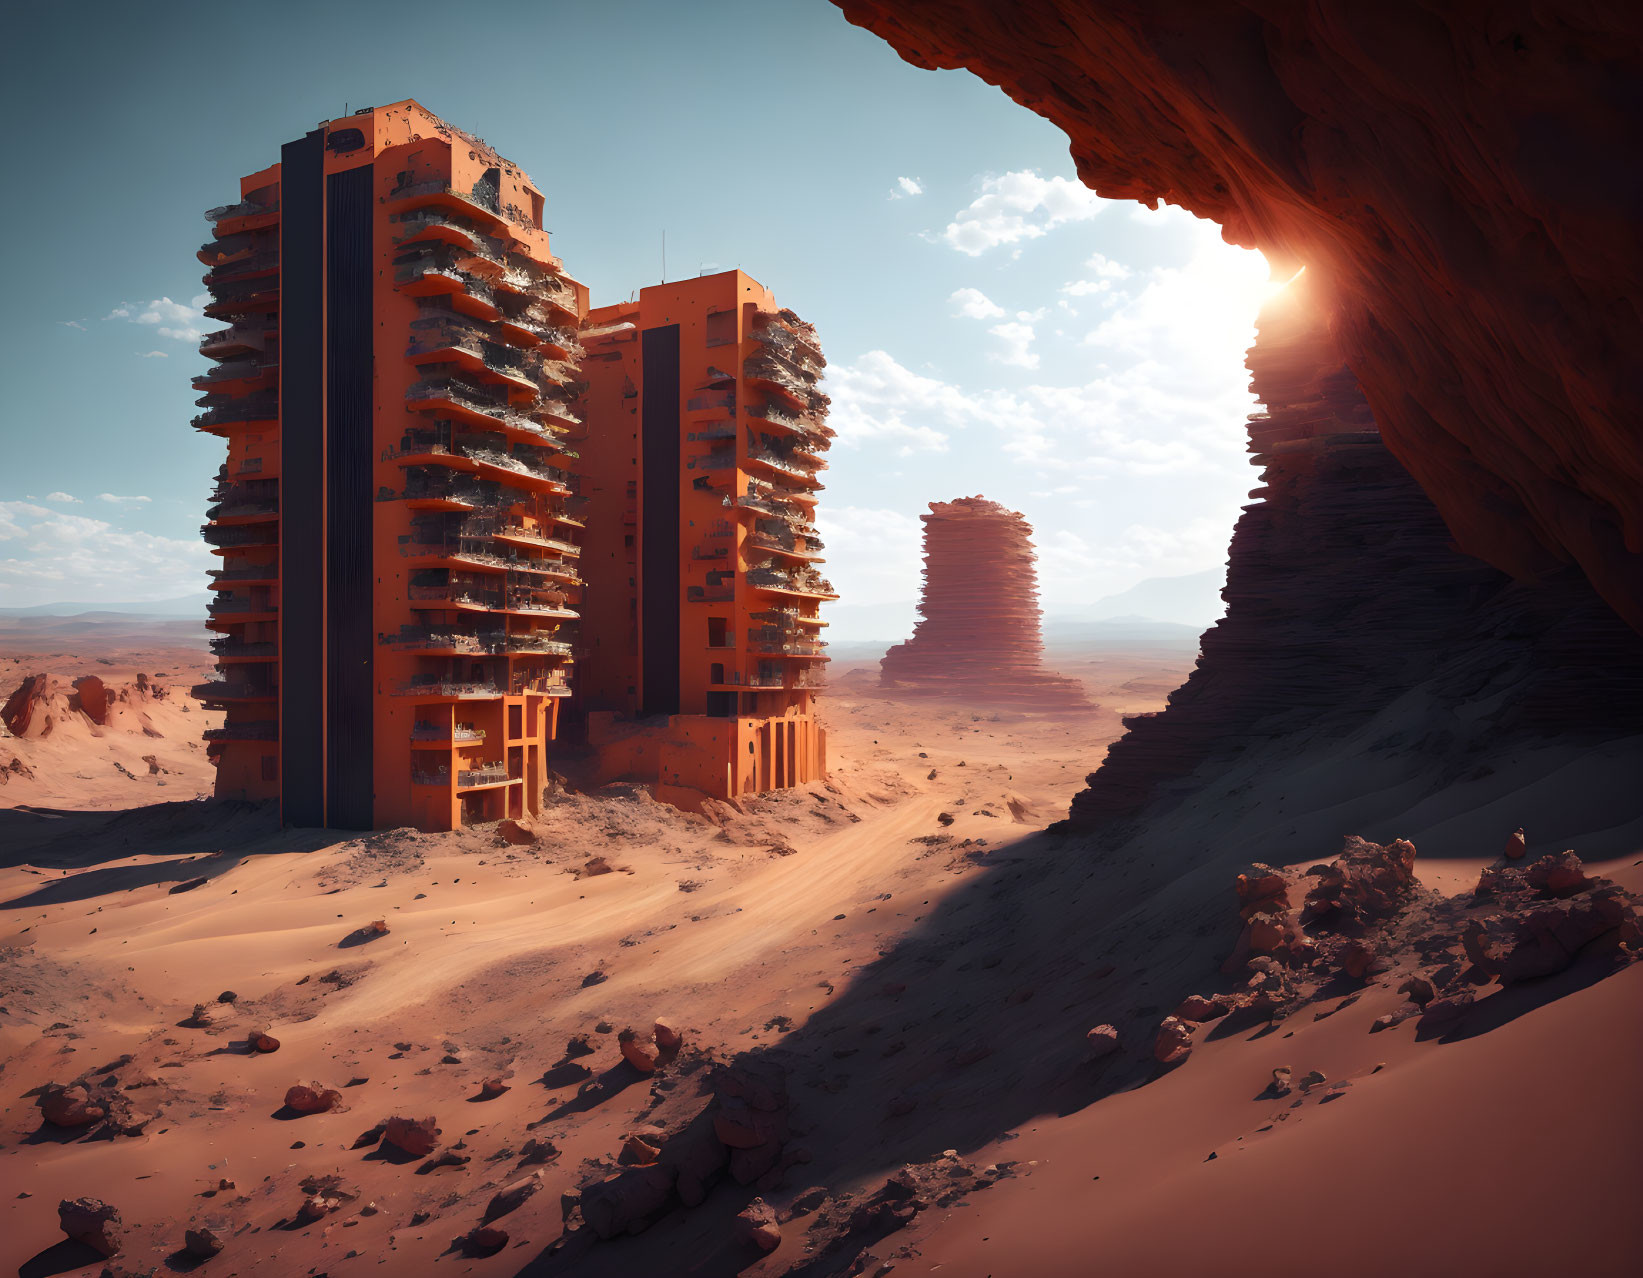 Derelict high-rise buildings in a futuristic desert sunset landscape